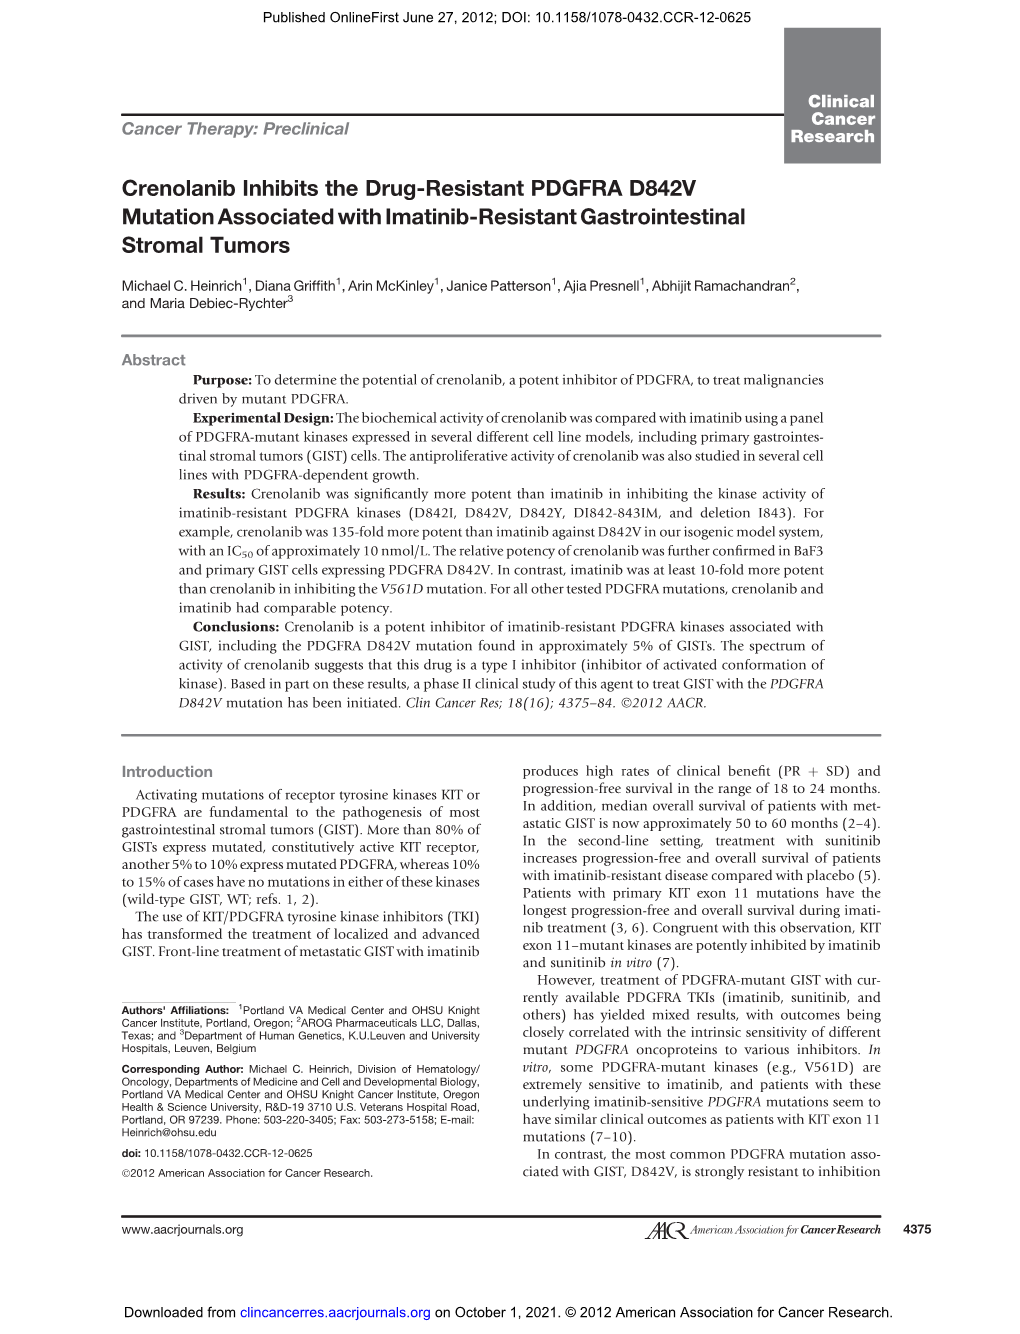 Crenolanib Inhibits the Drug-Resistant PDGFRA D842V Mutation Associated with Imatinib-Resistant Gastrointestinal Stromal Tumors